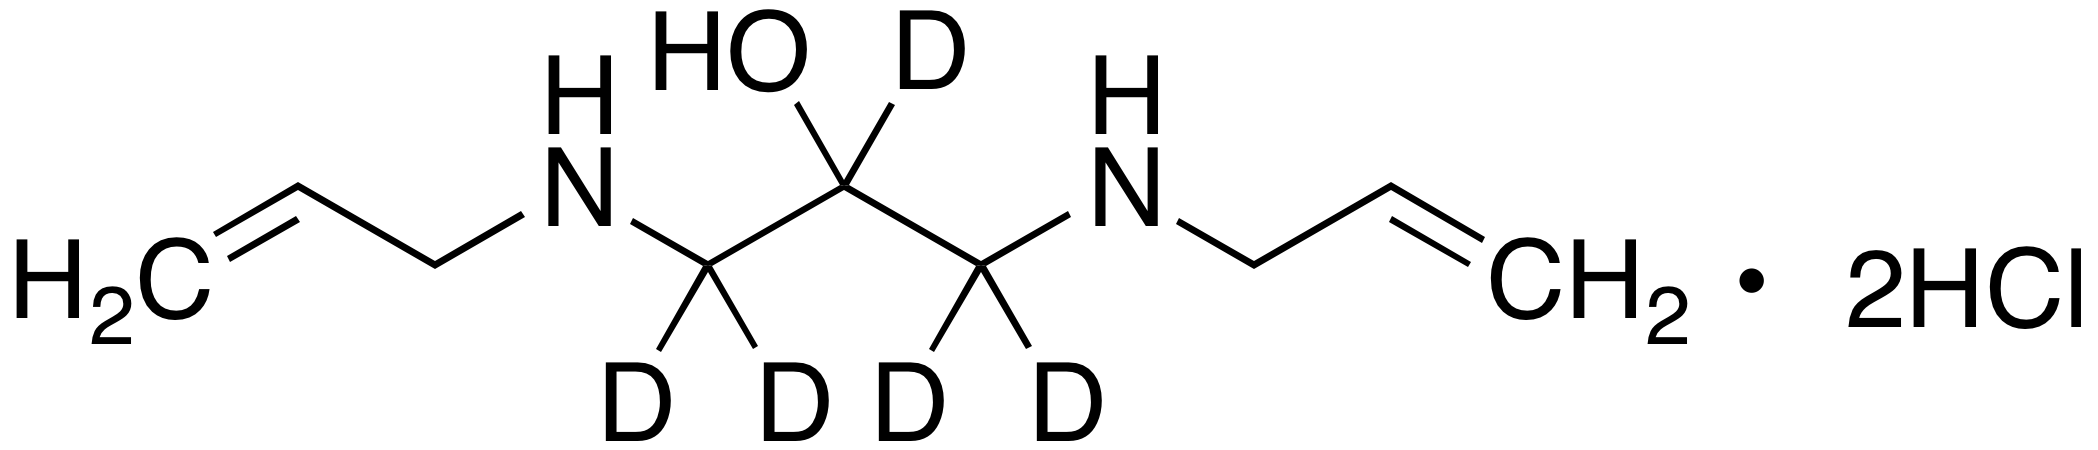 1,3-Bis(allylamino)-2-propanol Dihydrochloride-D5